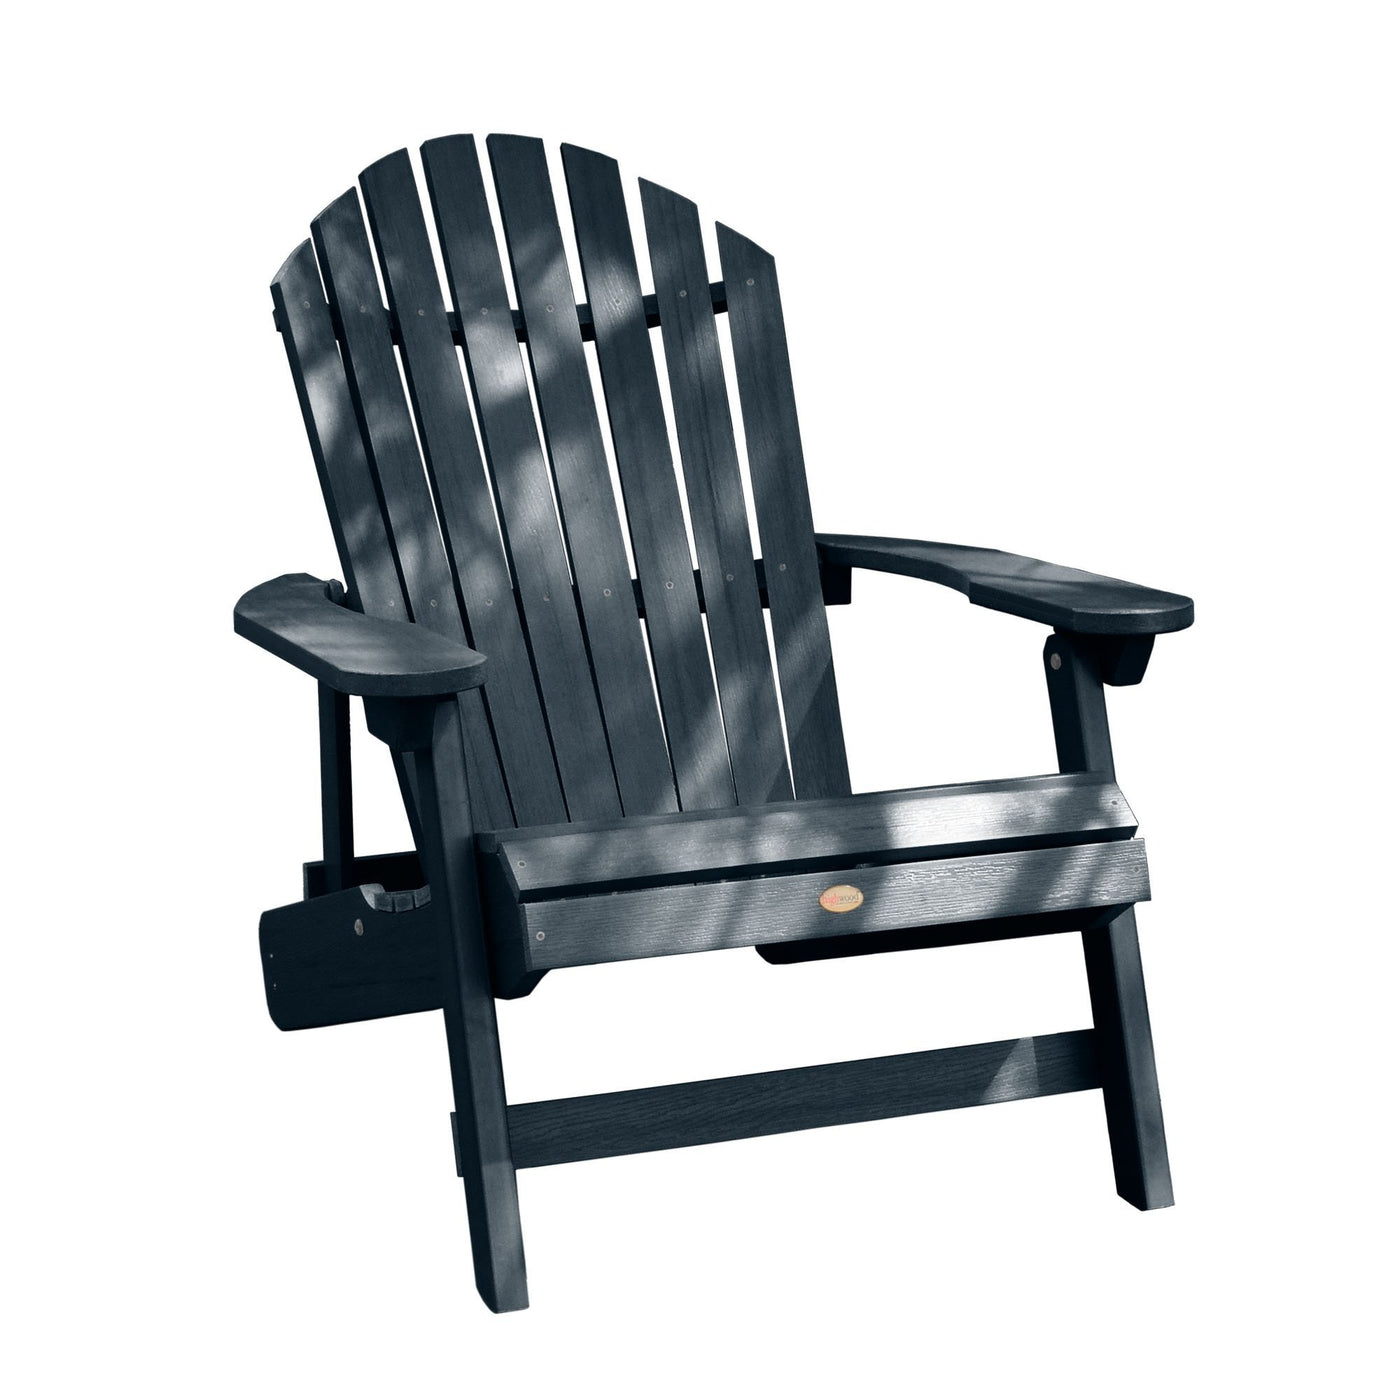 Refurbished King Hamilton Folding & Reclining Adirondack Chair Highwood USA Federal Blue 